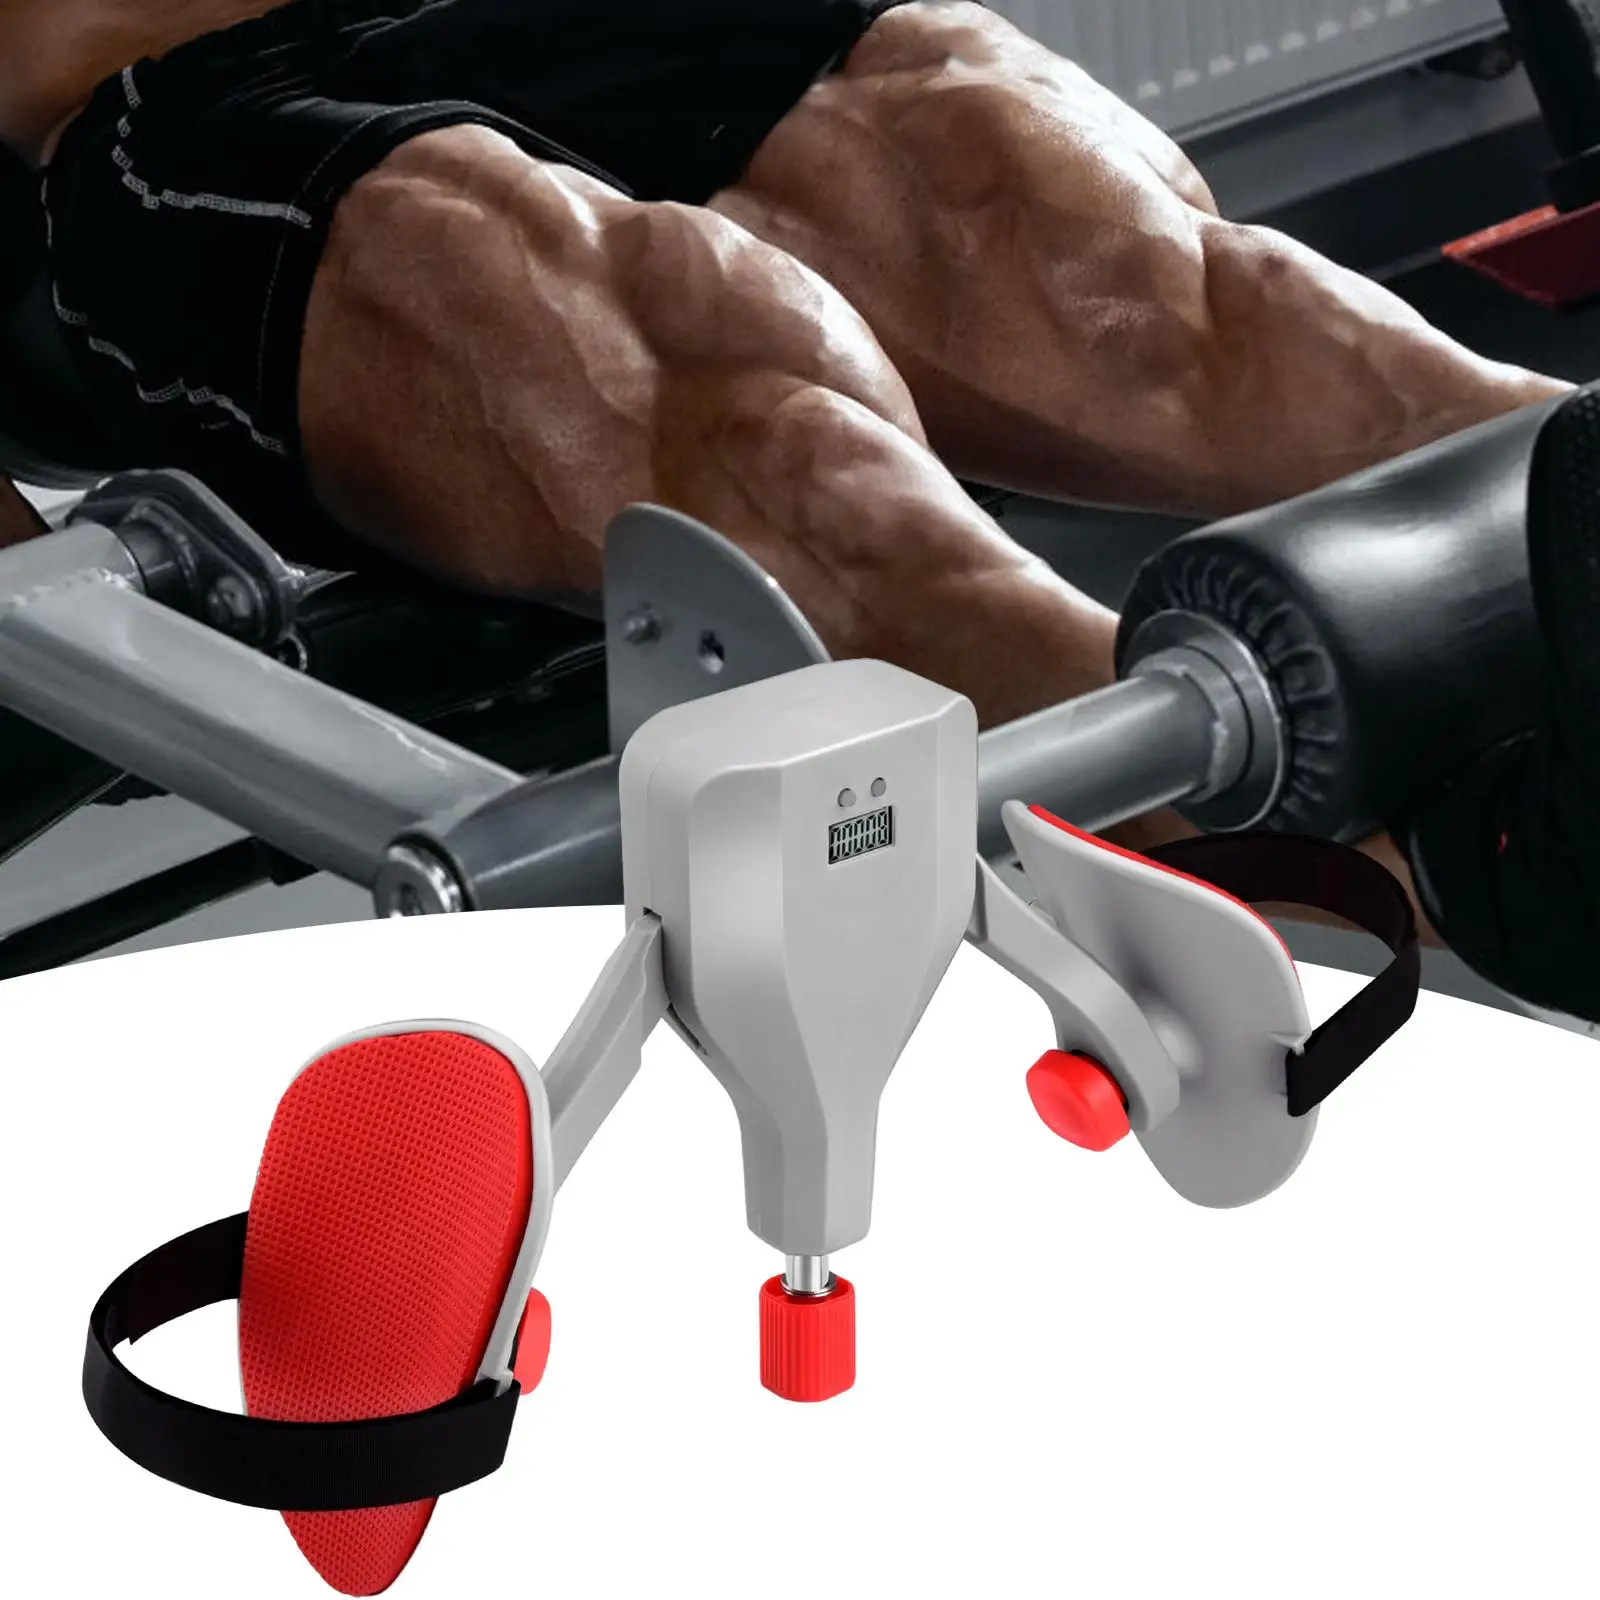 Thigh Exerciser Leg Exercise Machine Inner Thigh Training Equipment Strengthening Device Thigh Trimmer for Fitness Home Gym